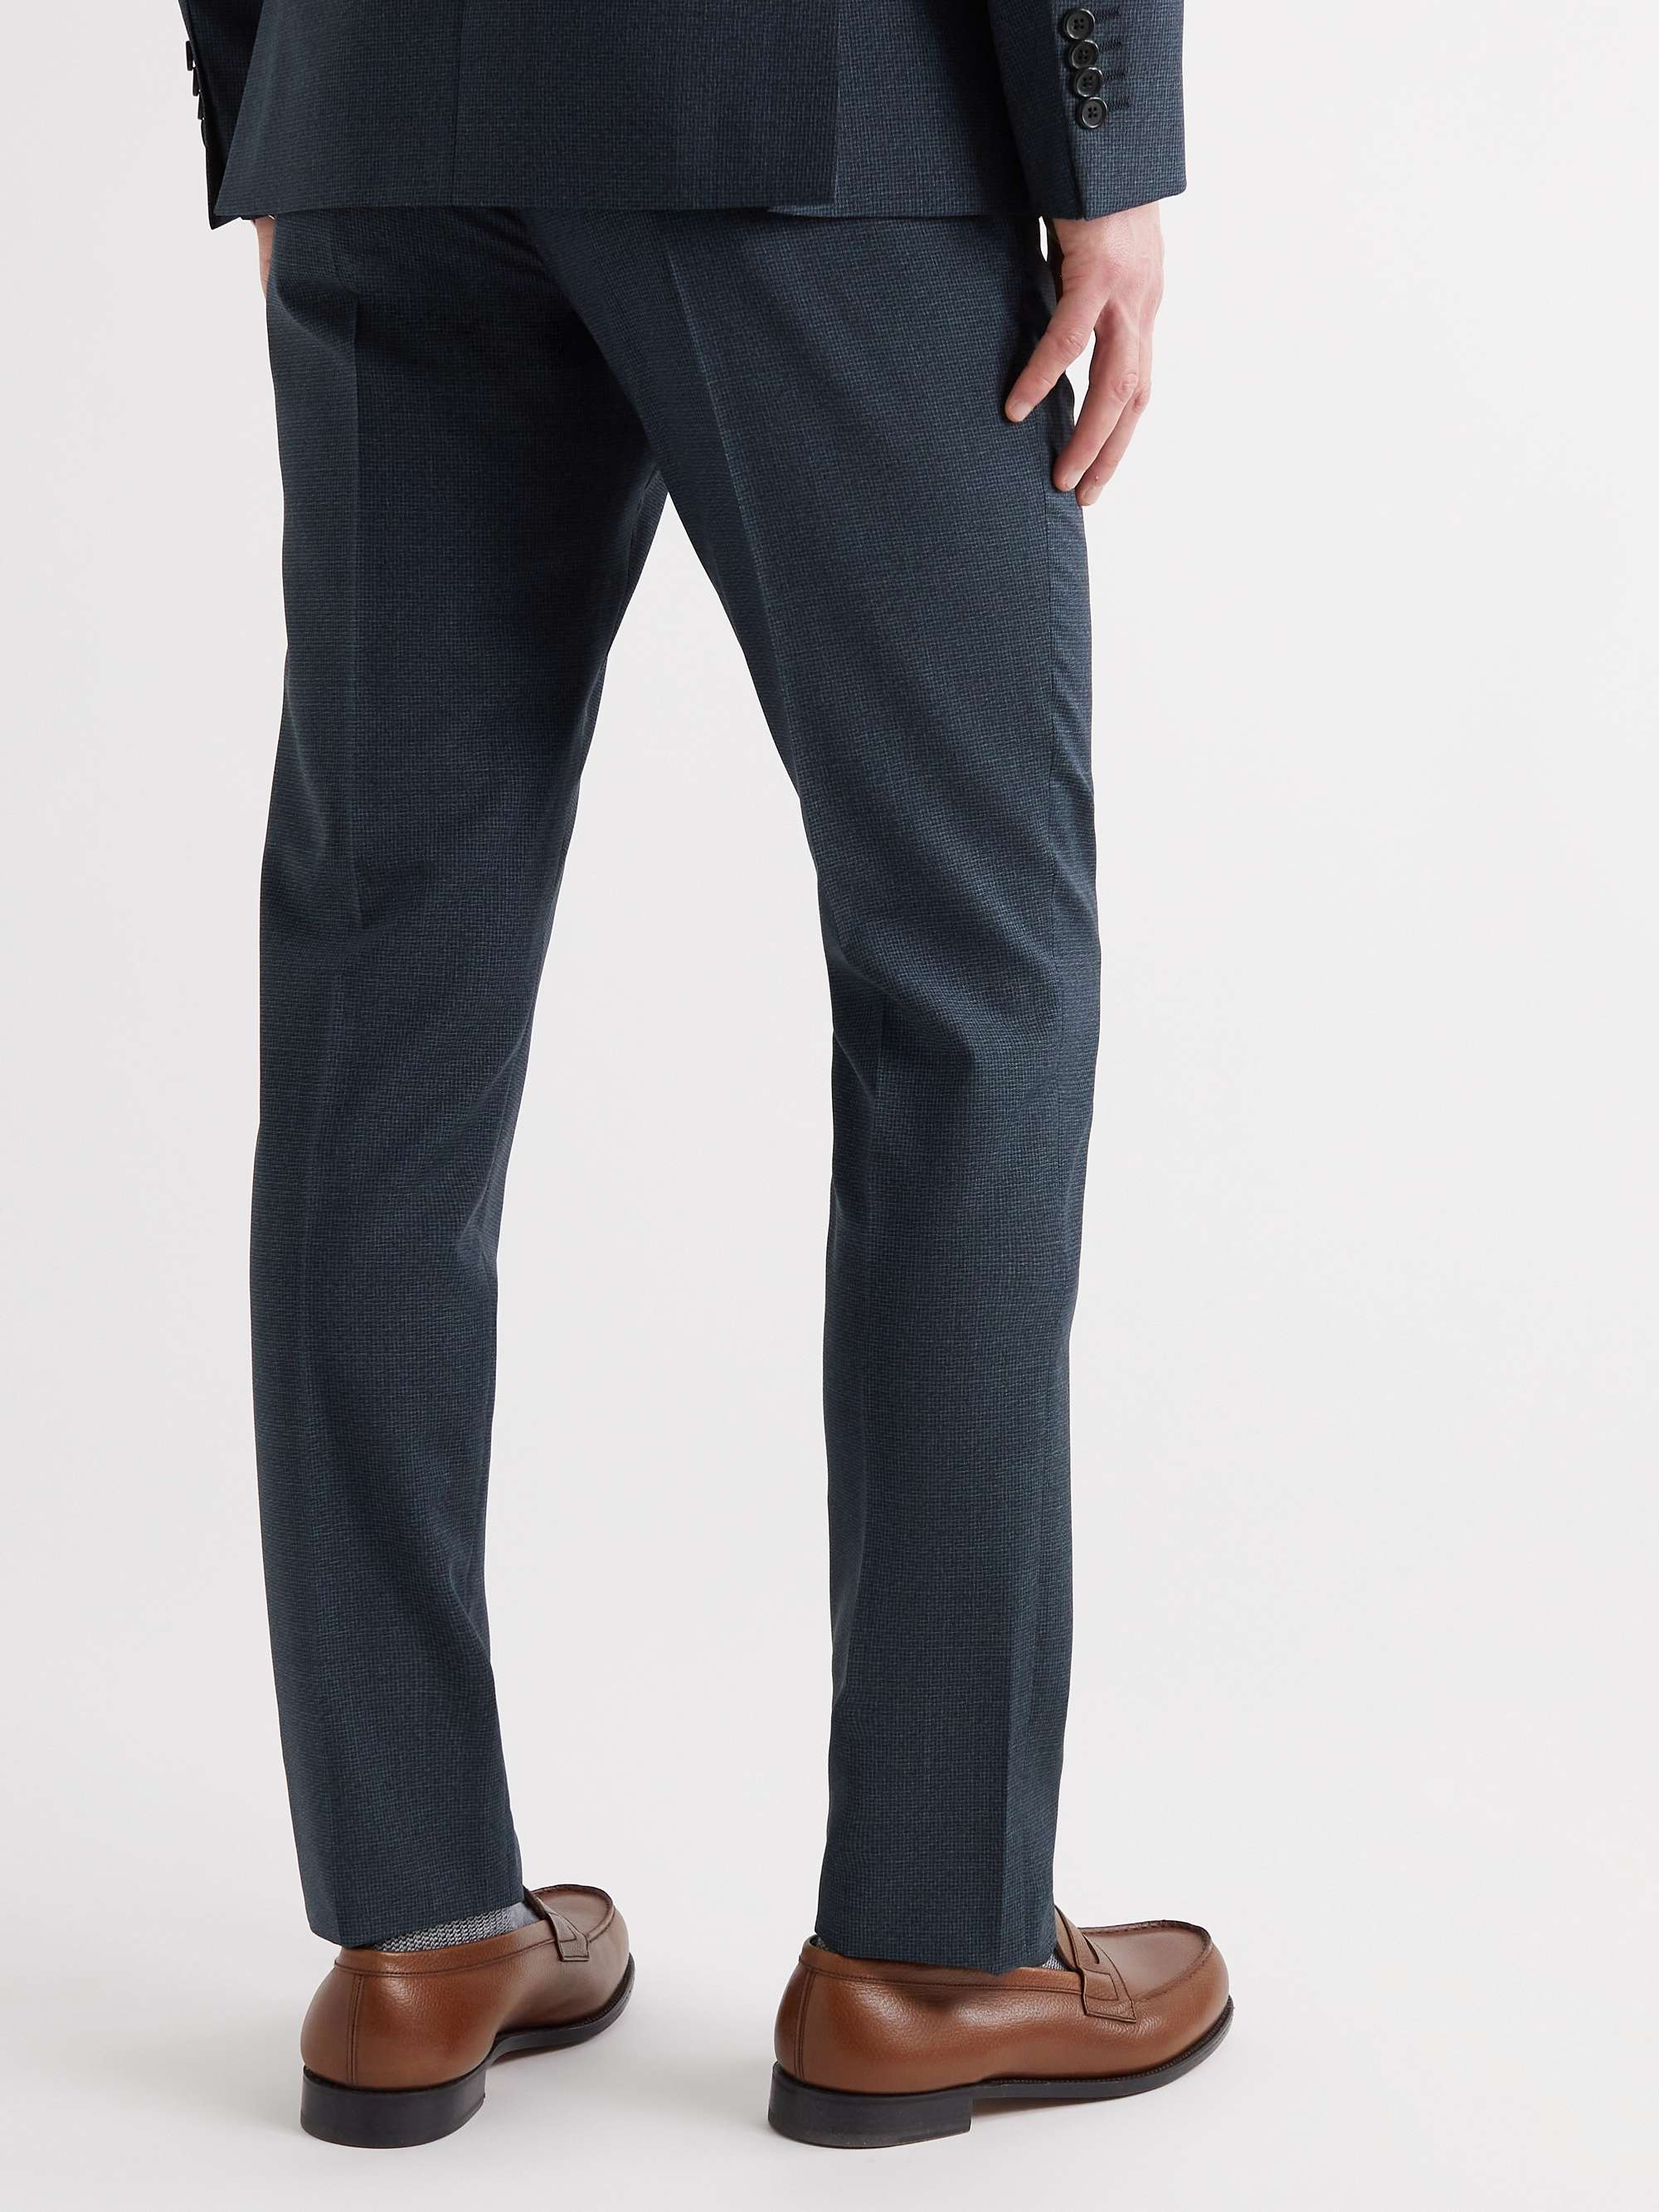 PAUL SMITH Slim-Fit Virgin Wool Suit Trousers